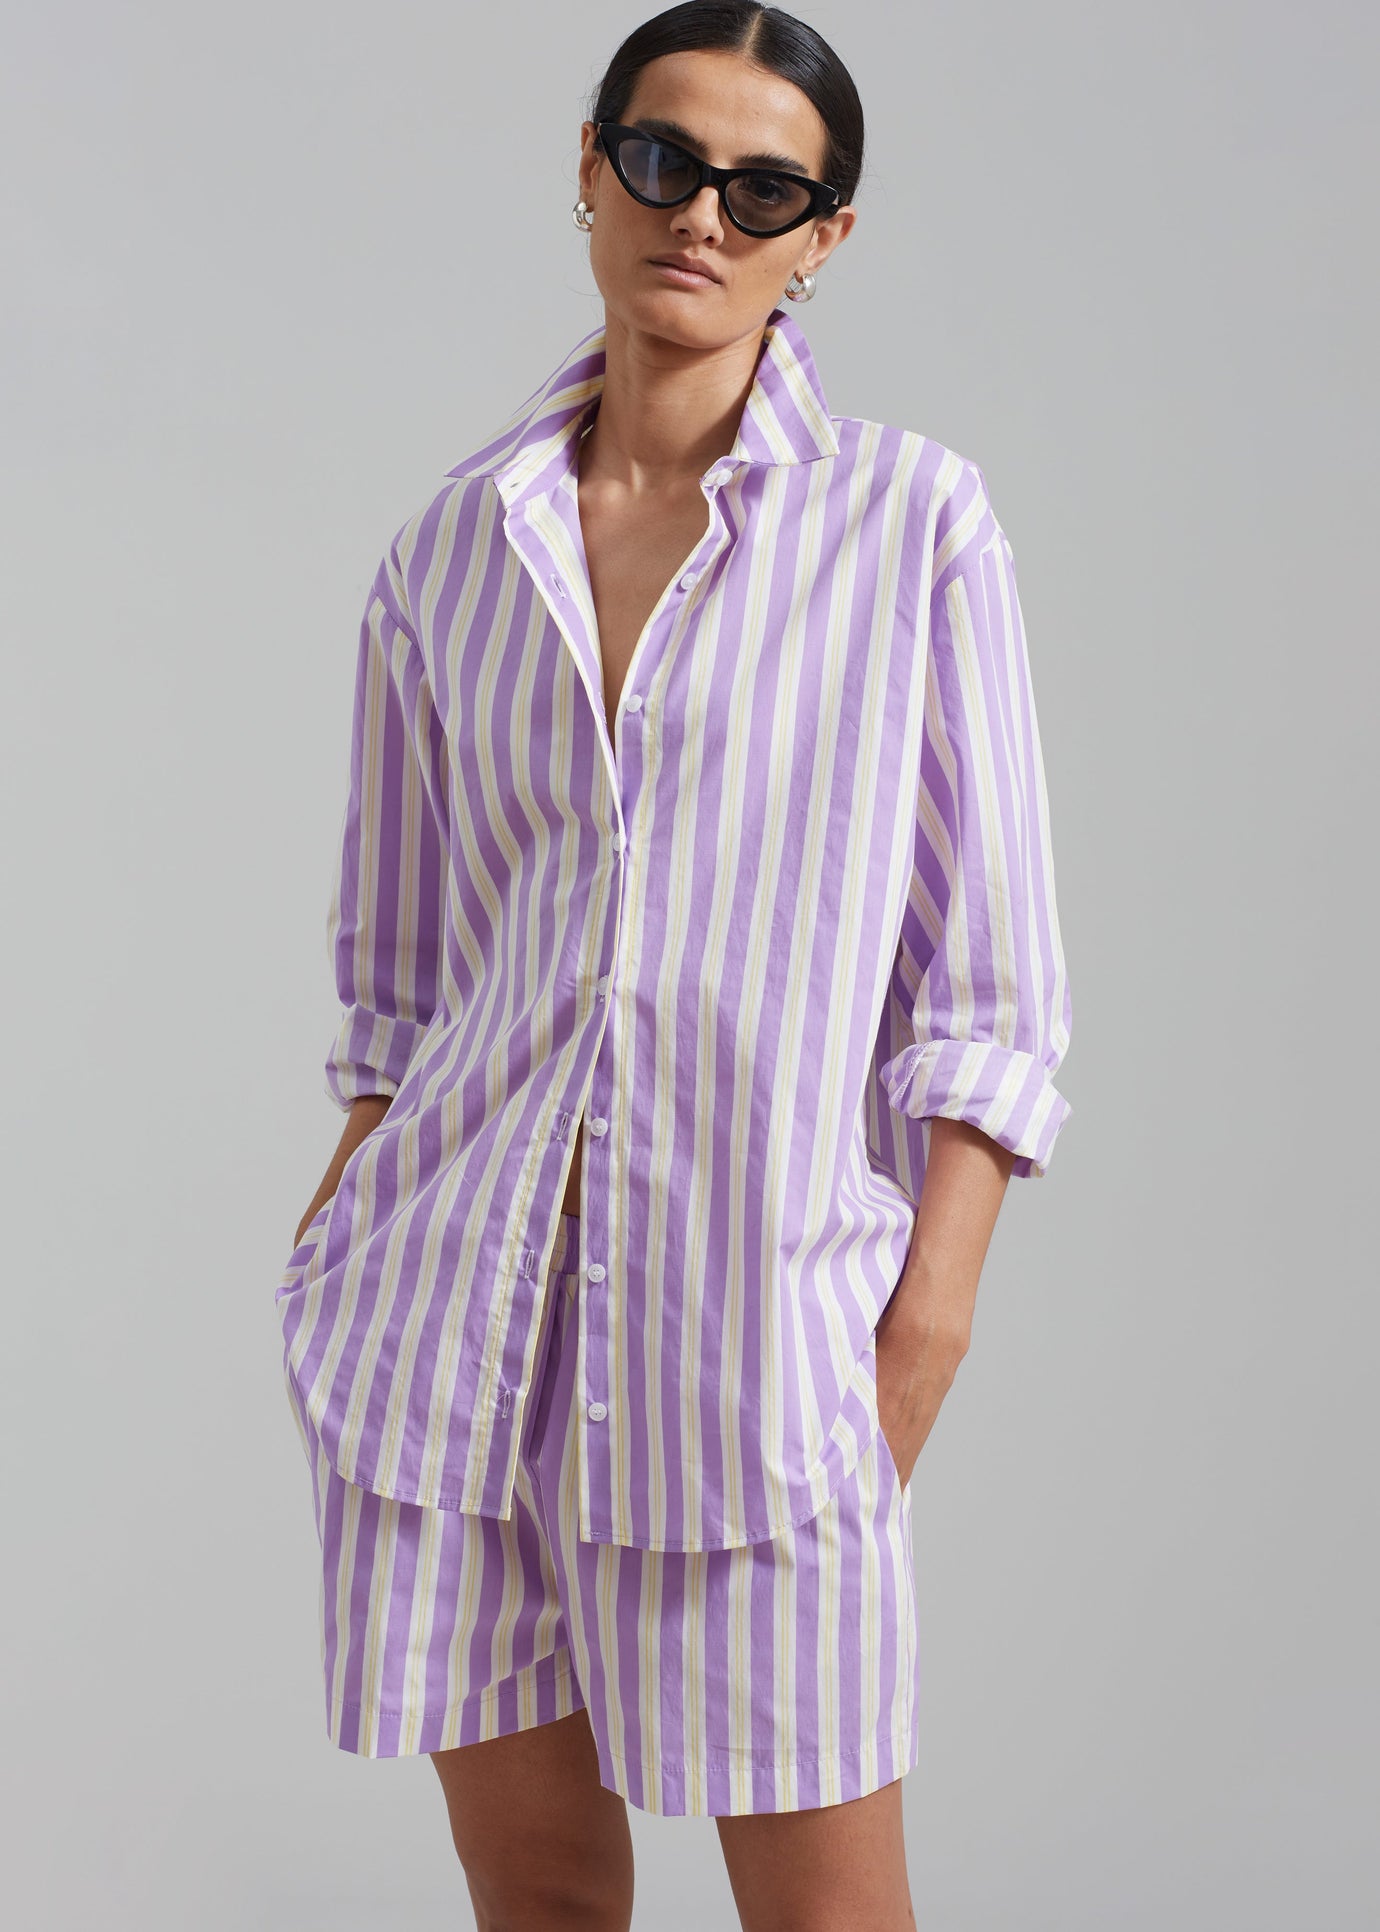 Juno Cotton Shirt - Violet Stripe